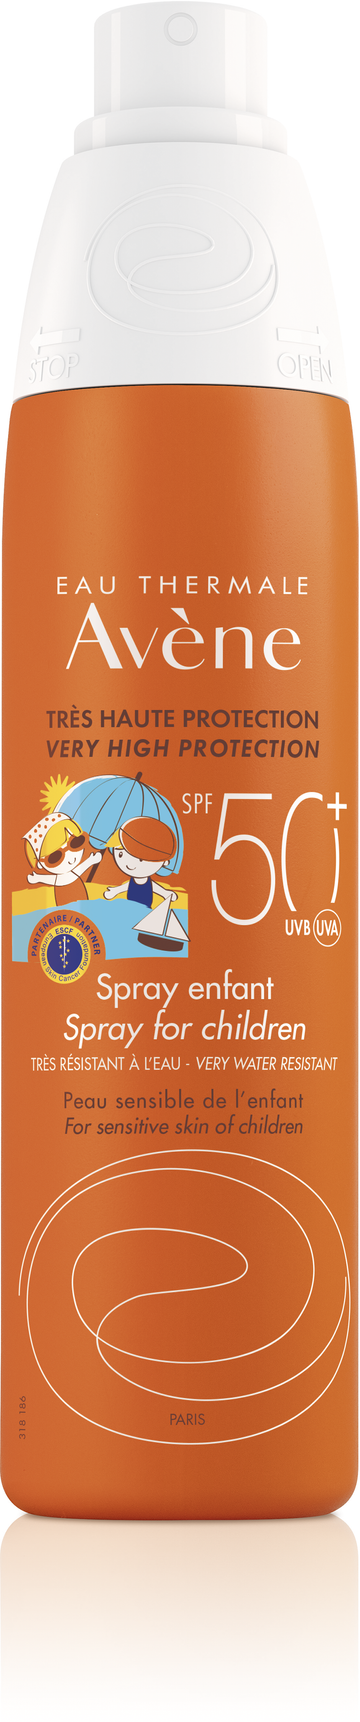 Avène Spray 50+ for children 